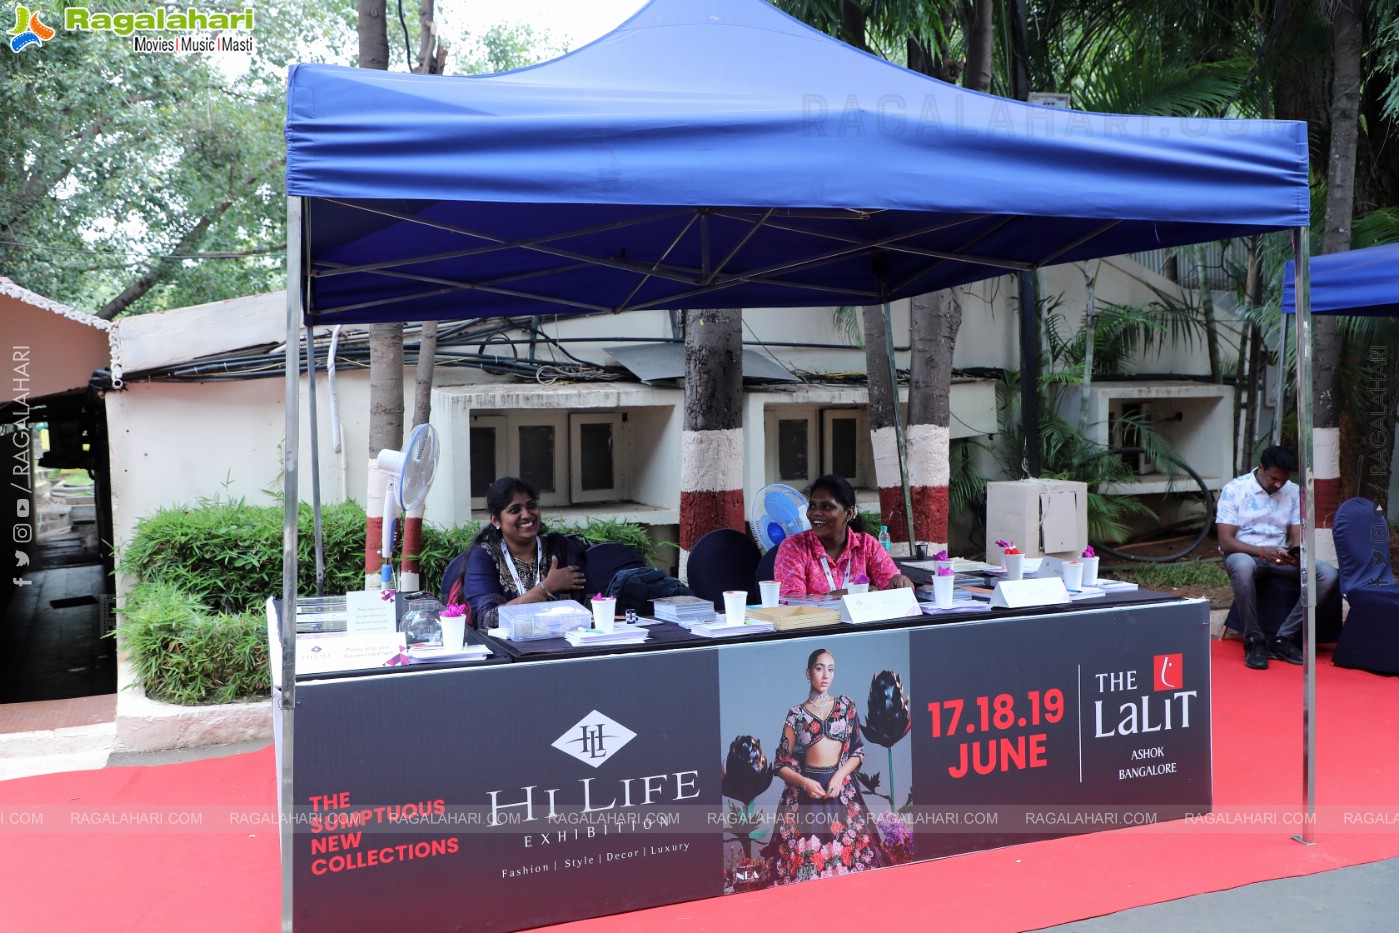 Hi Life Exhibition June 2024 Kicks Off at The Lalit Ashok, Bangalore